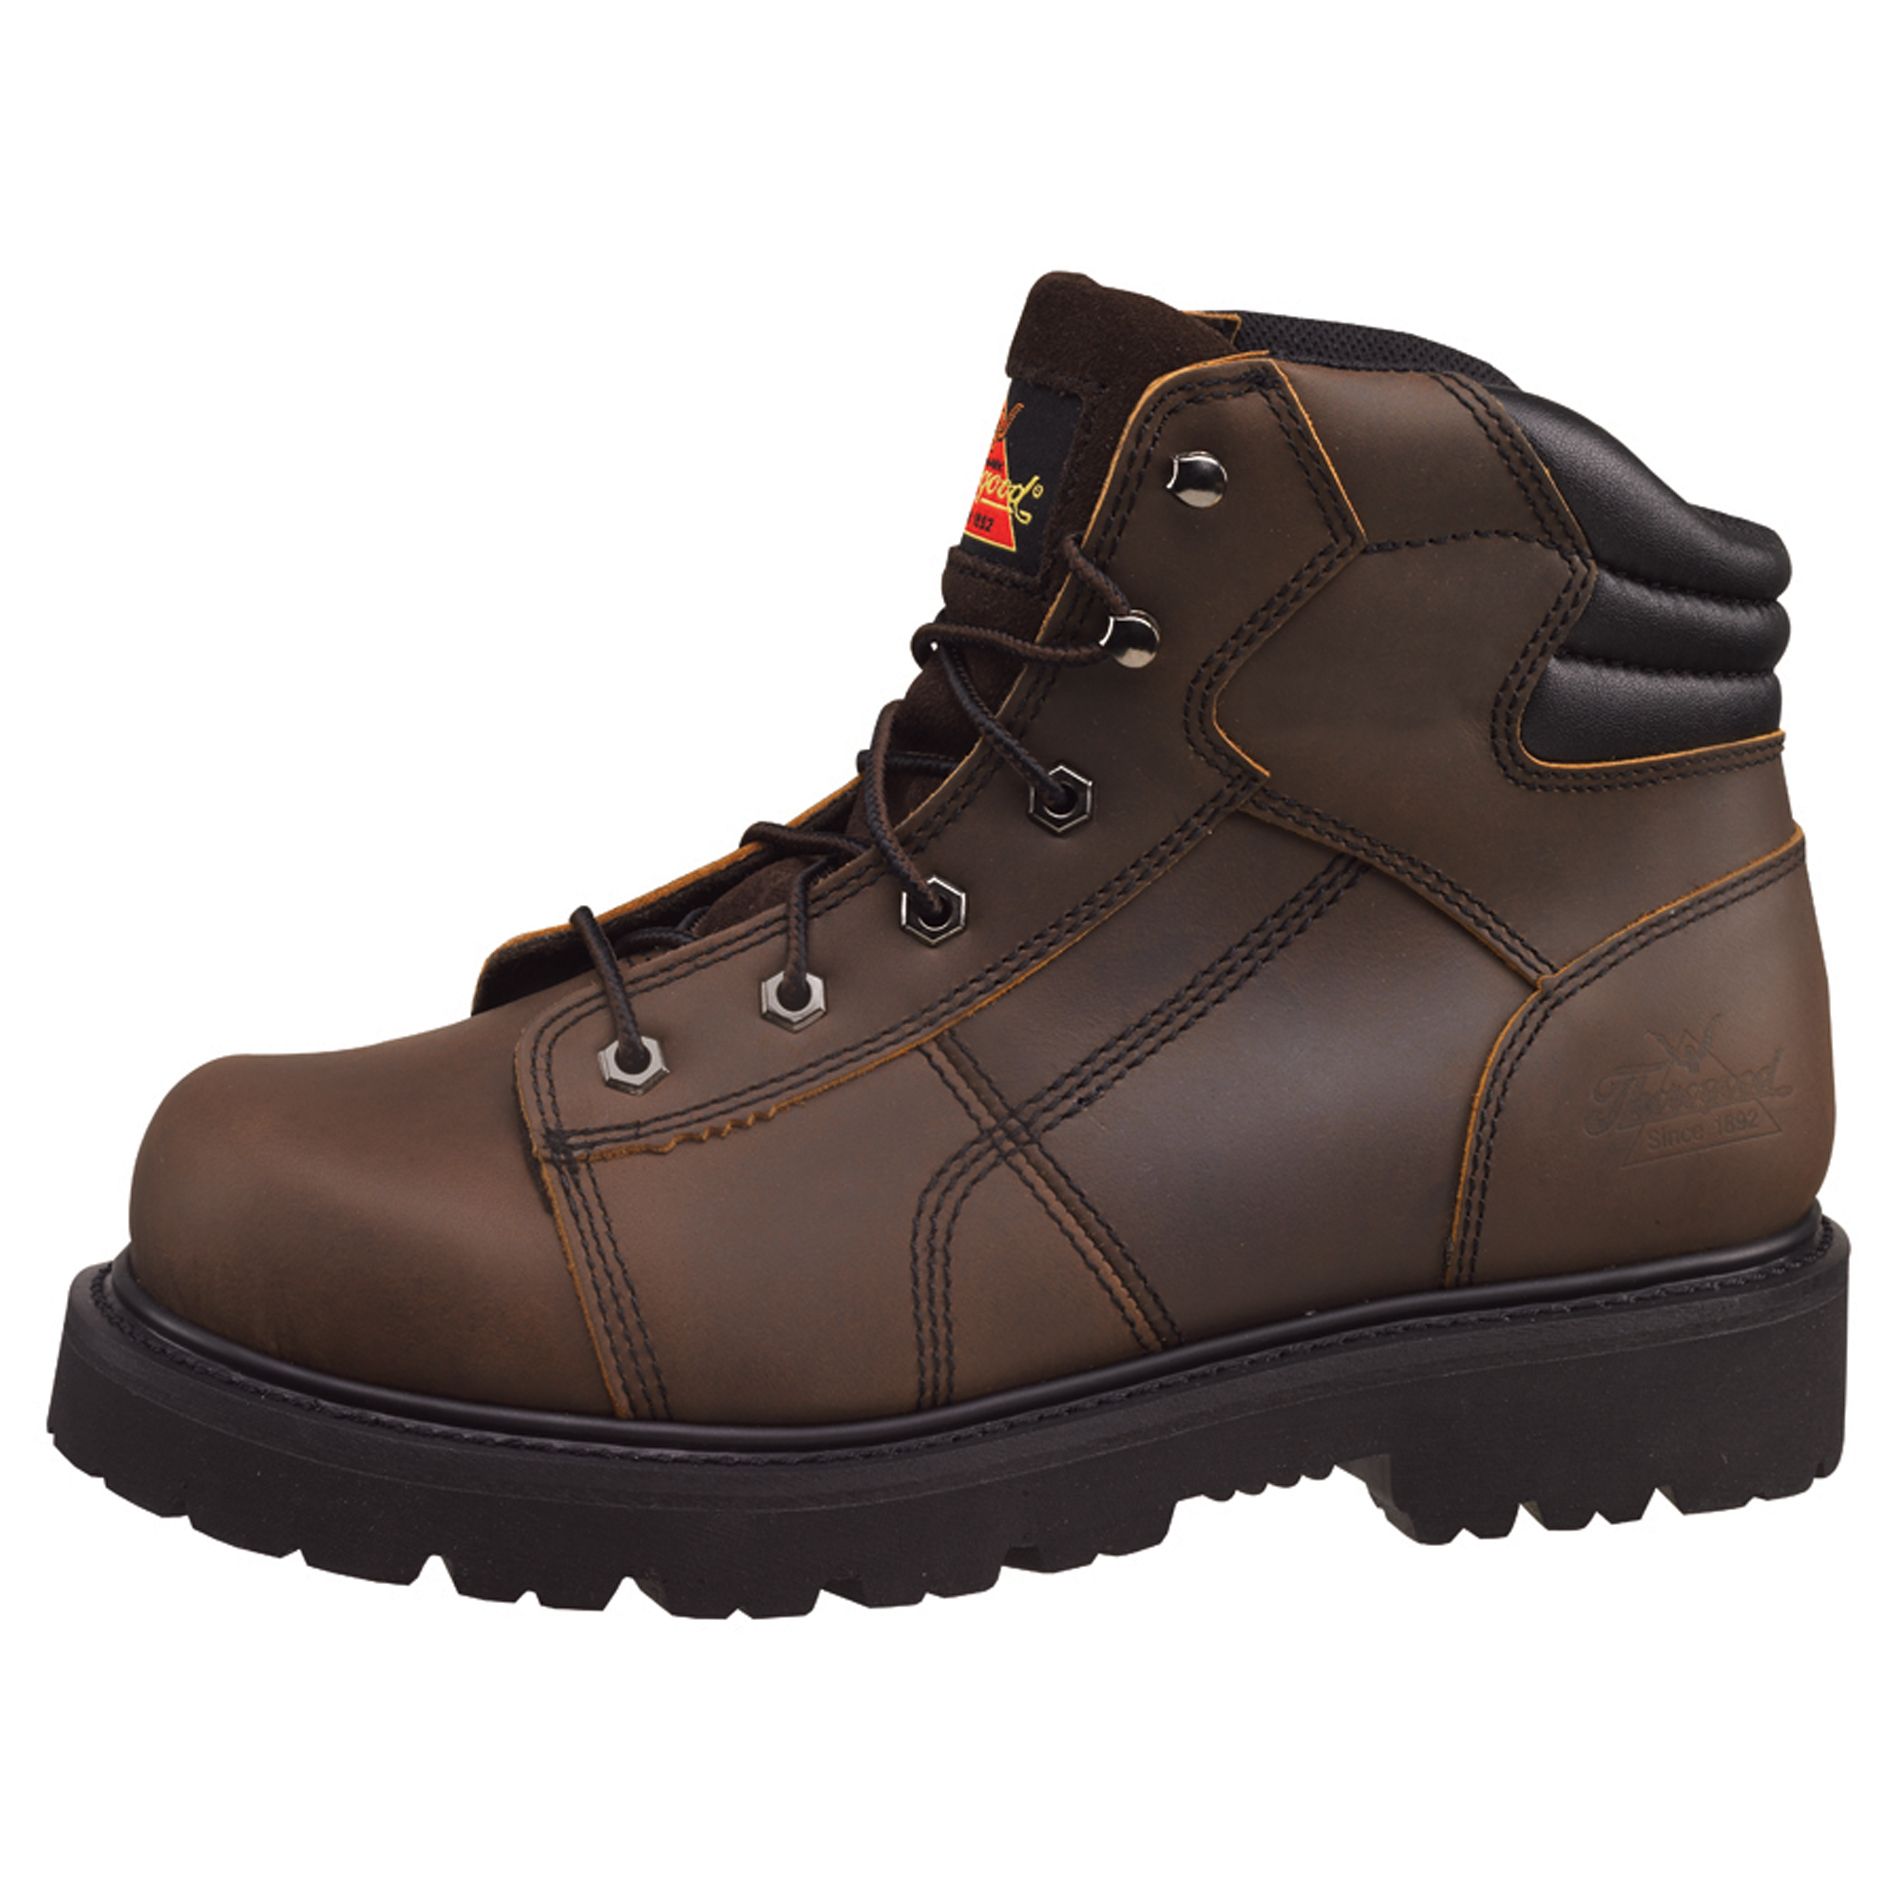 Men's American Heritage 804-4650 Brown Steel Toe 6" Work Boots - Wide Width Available